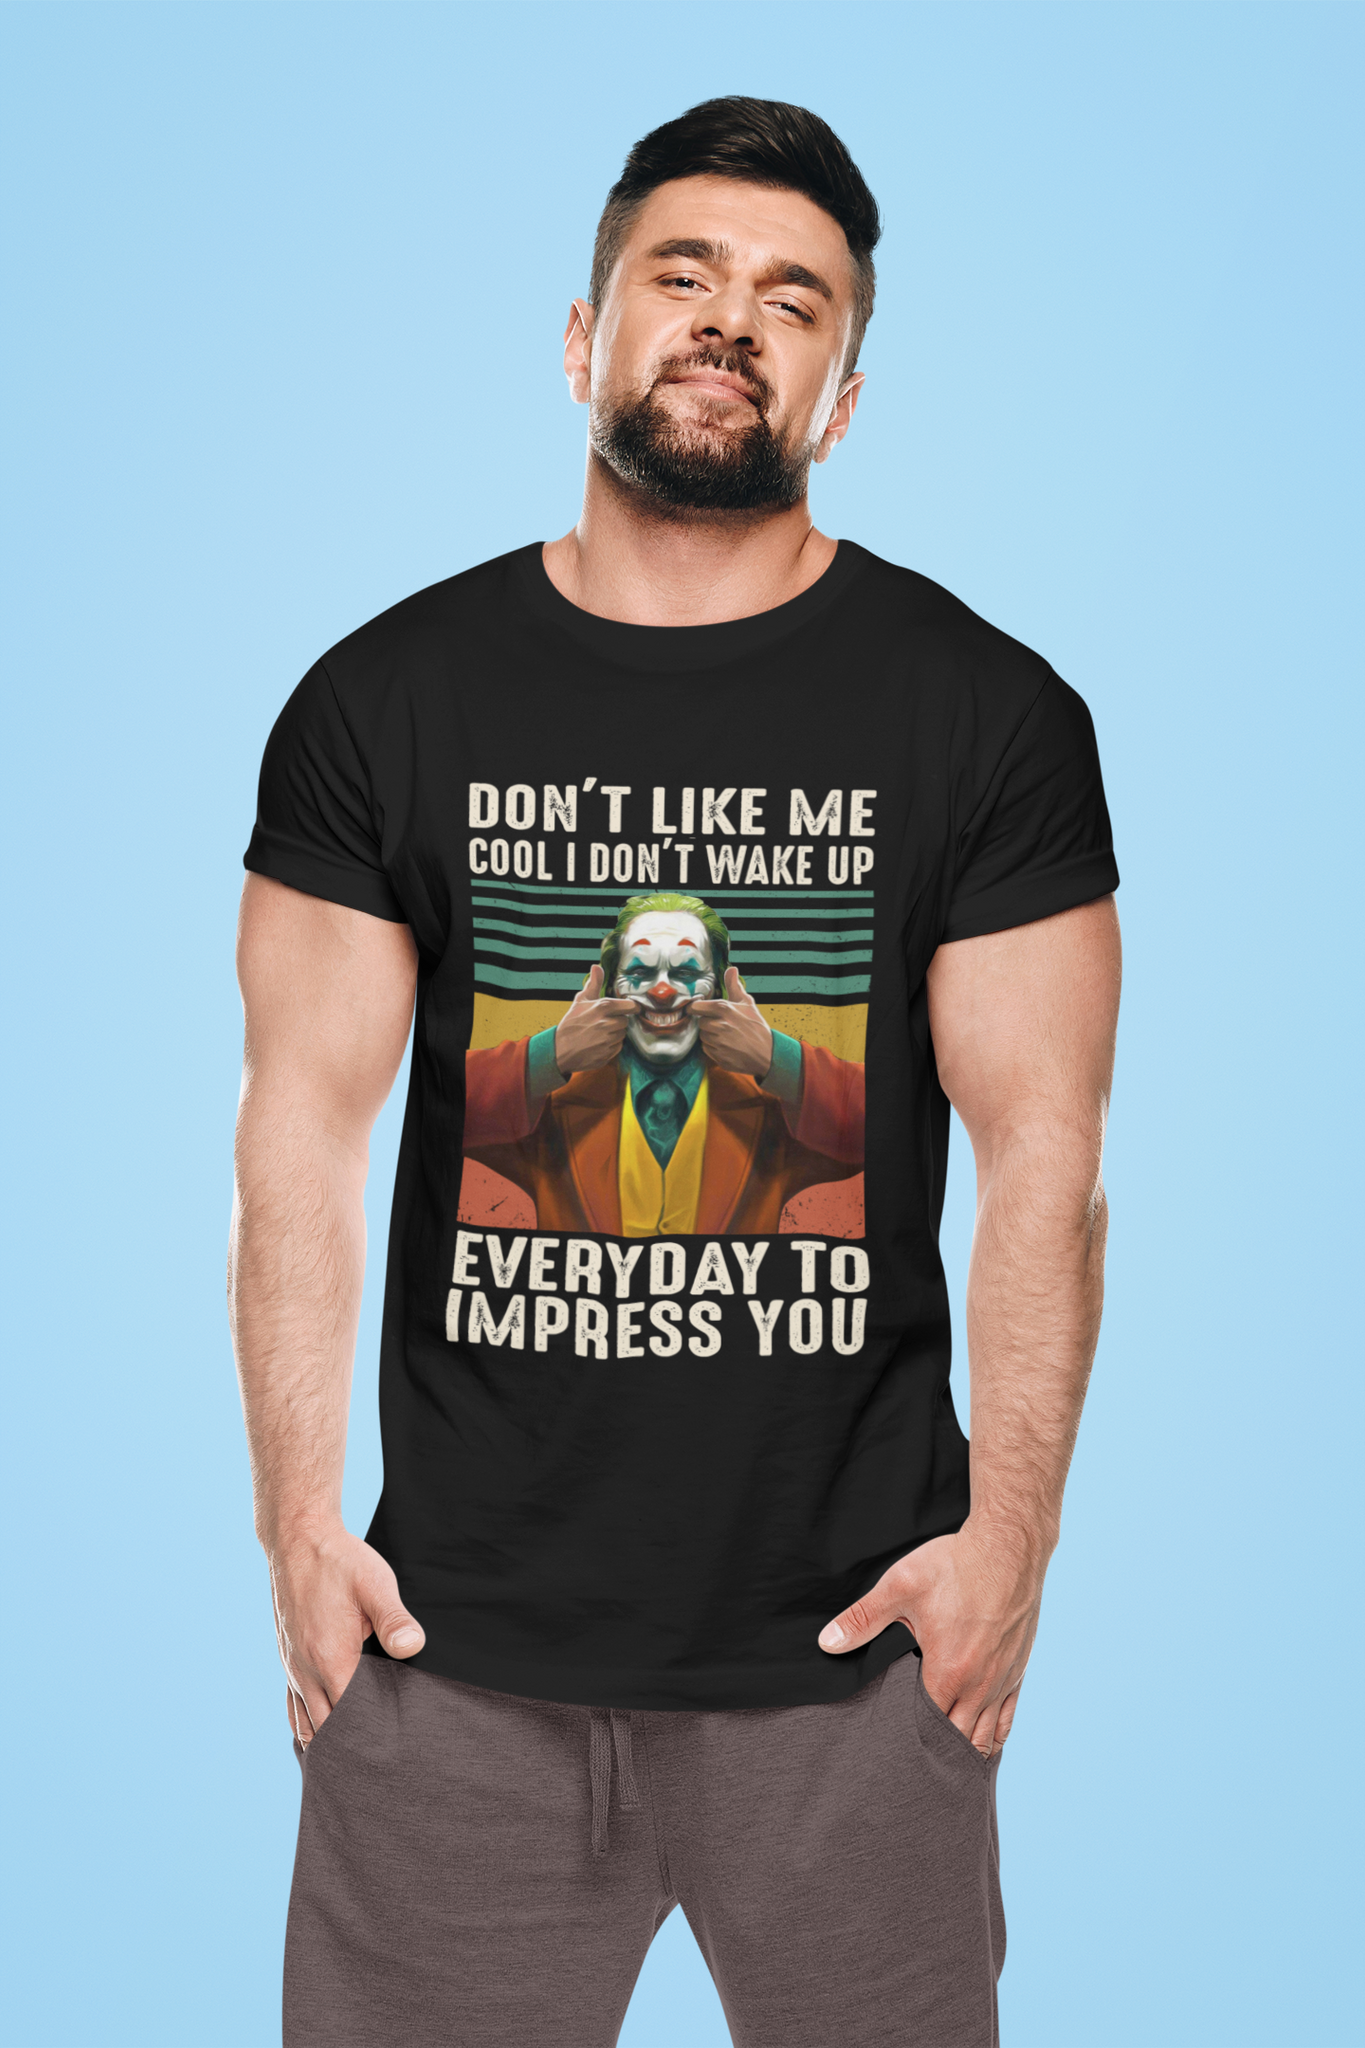 Joker Vintage T Shirt, Joker The Comedian Tshirt, Dont Like Me Cool I Dont Wake Up Shirt, Halloween Gifts